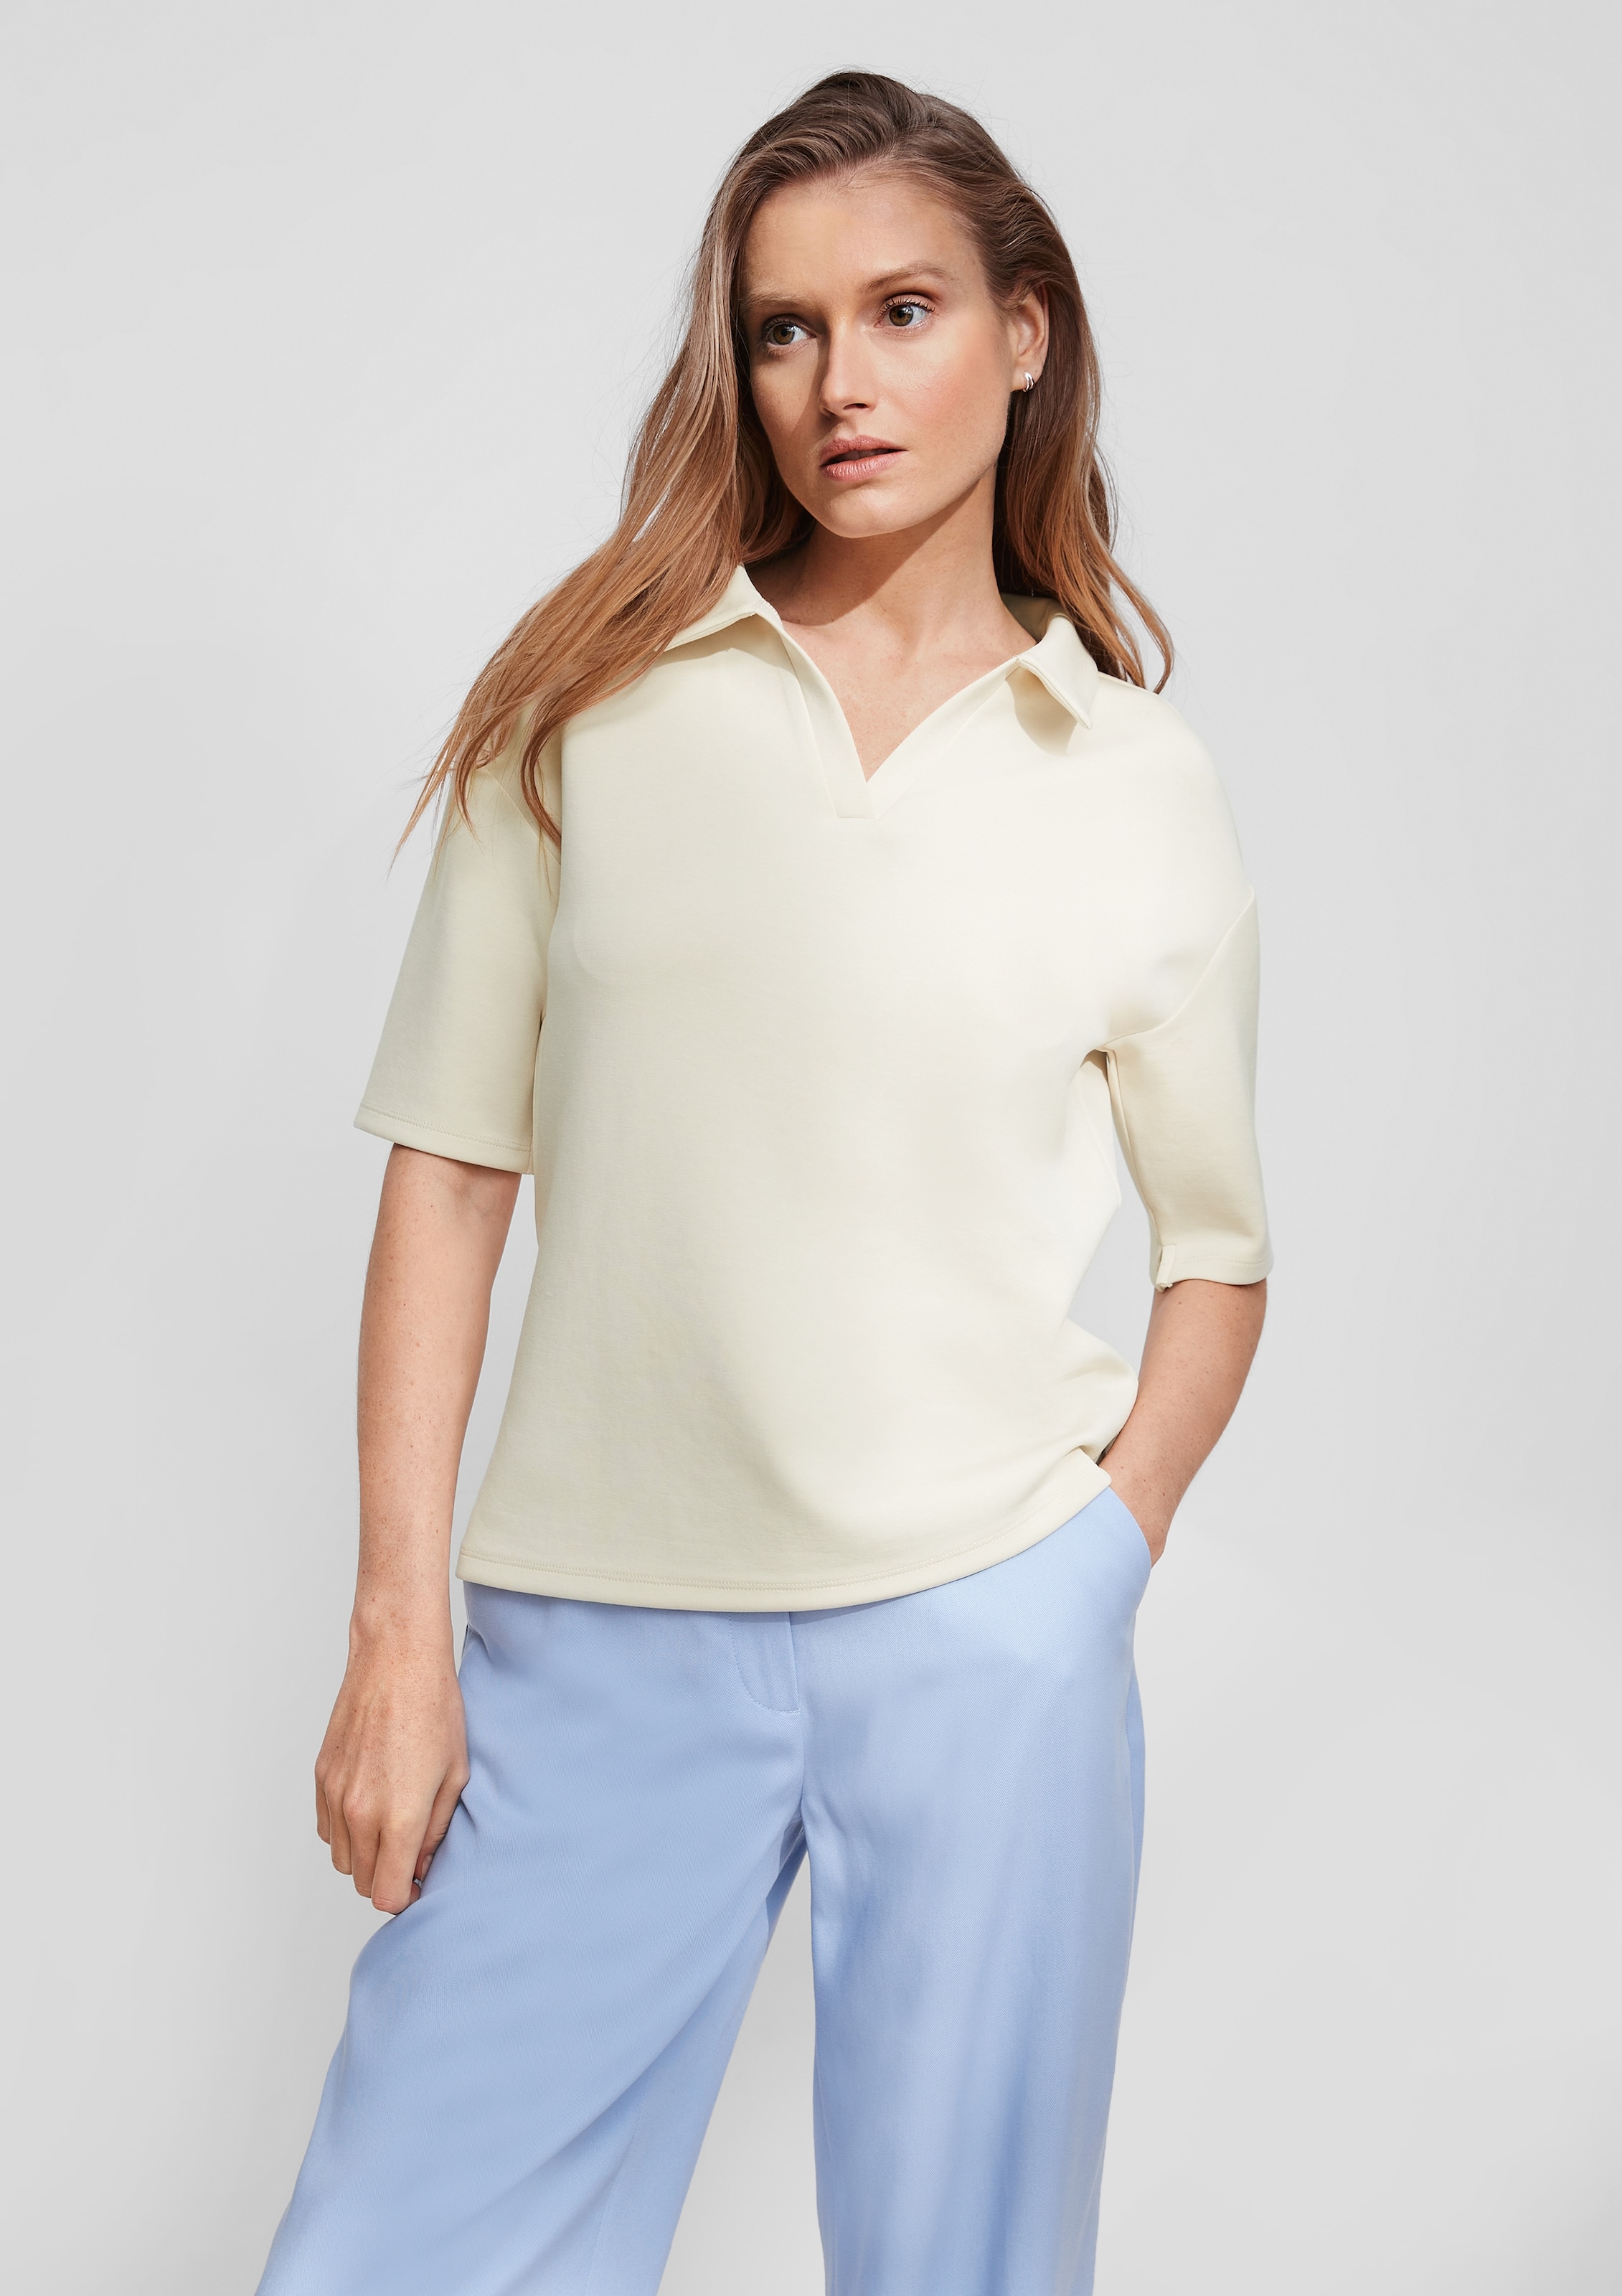 Frauen Shirts & Tops COMMA Shirt in Creme - TL57258